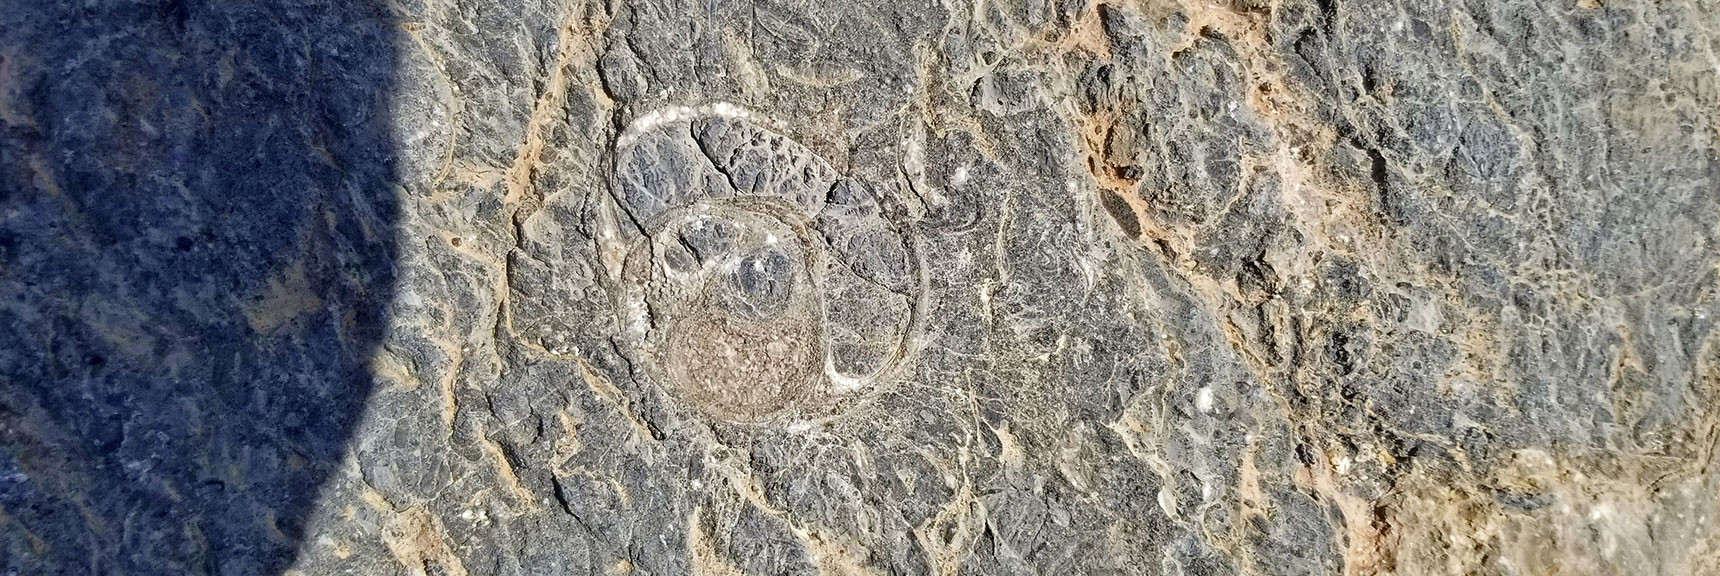 More Fossils Along the Base of Fossil Ridge | Fossil Ridge End to End | Sheep Range | Desert National Wildlife Refuge, Nevada